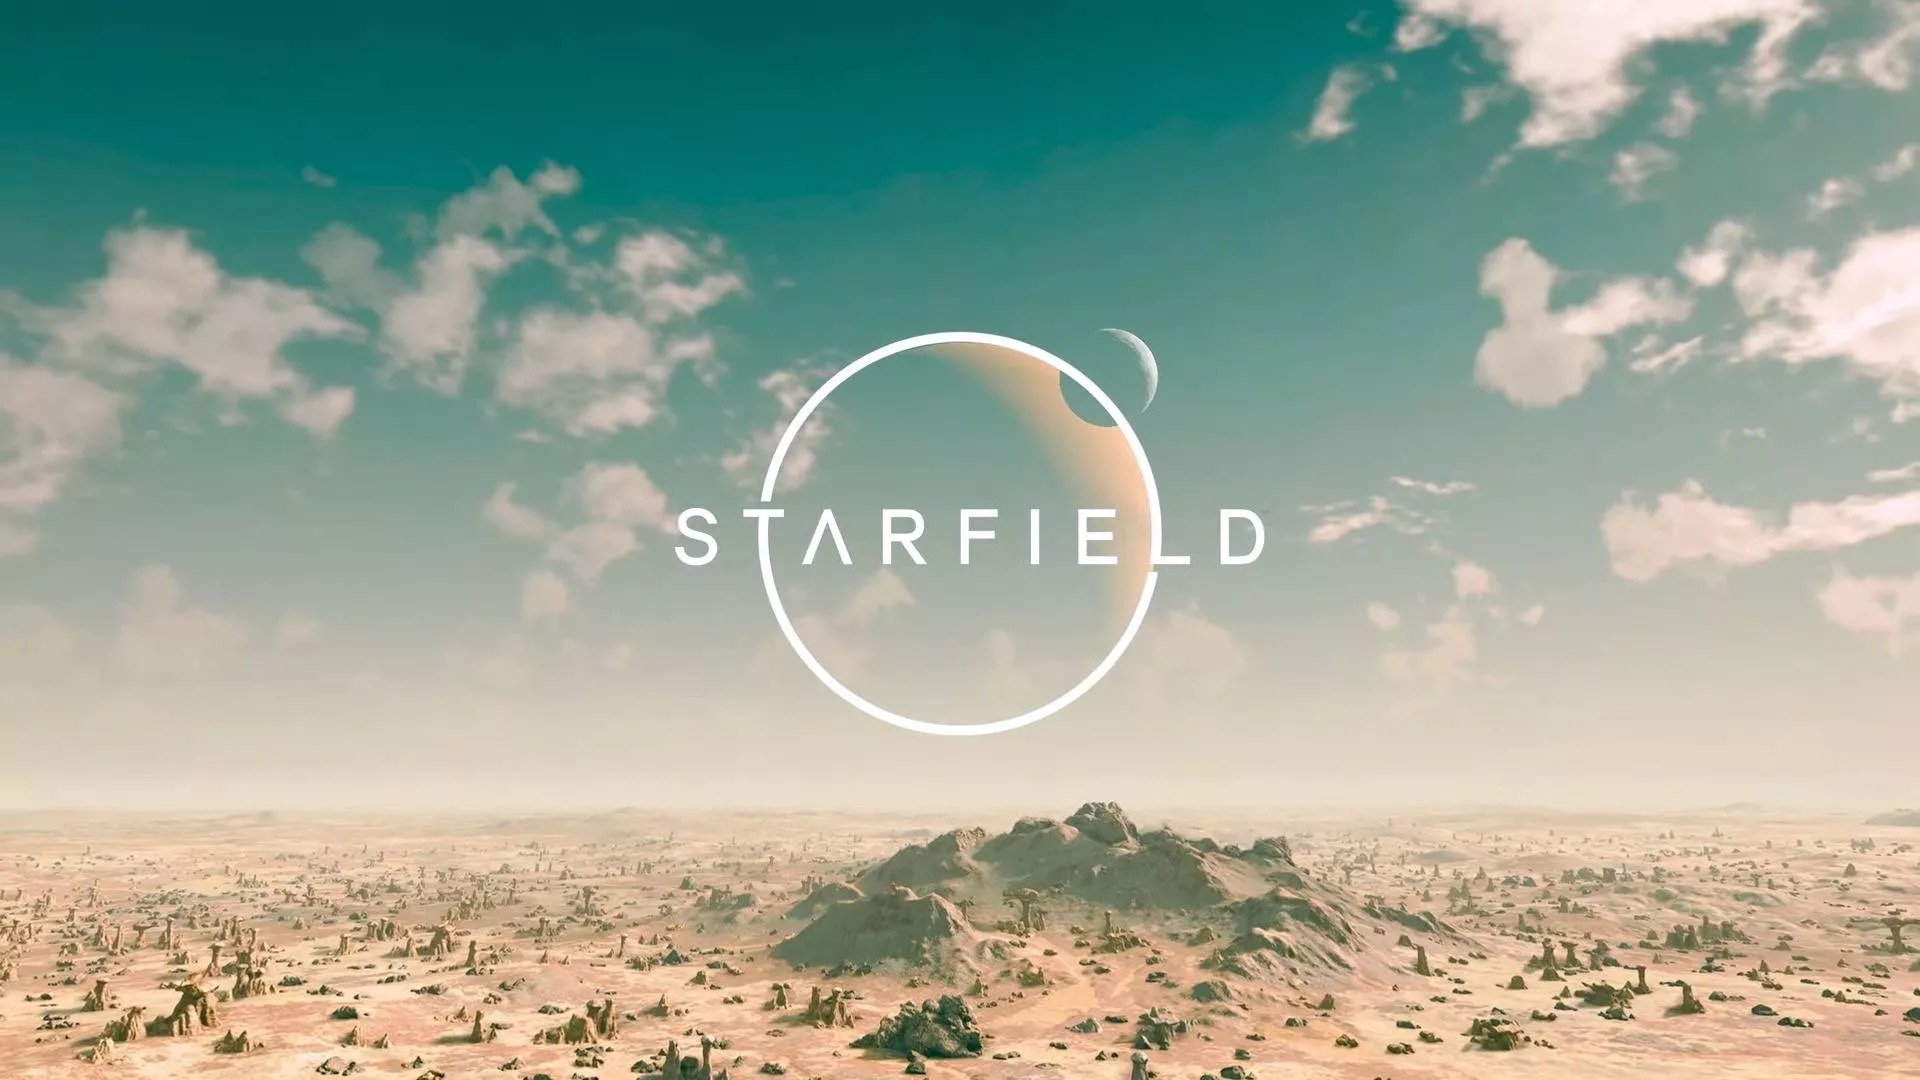 Starfield станет самой отполированной игрой Bethesda на релизе: с сайта NEWXBOXONE.RU